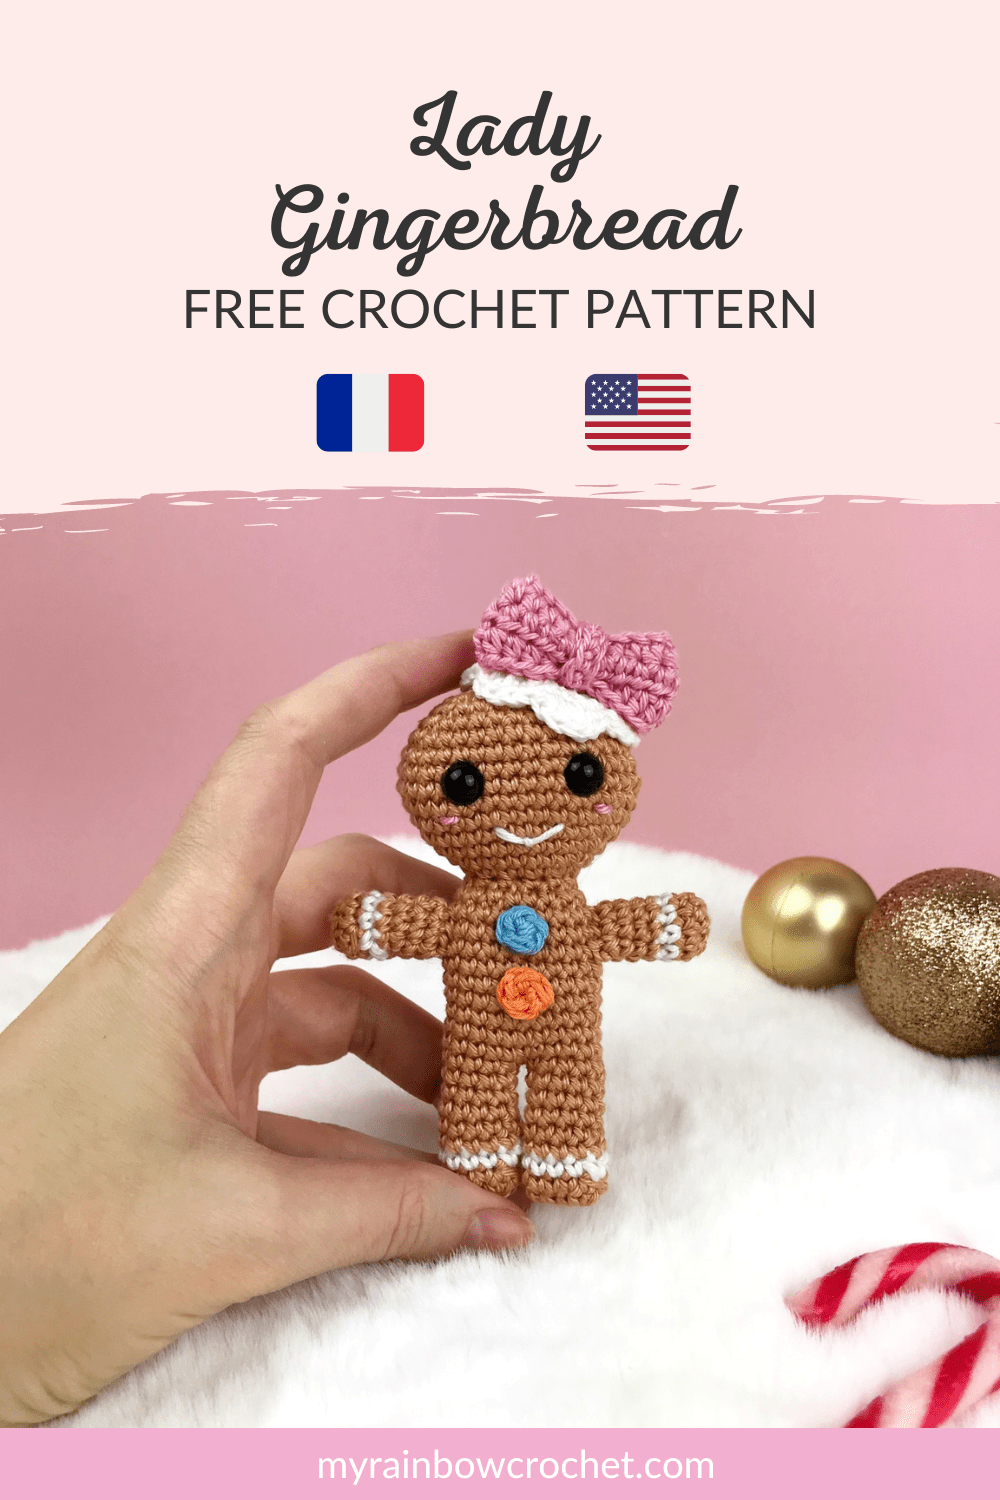 crochet pattern lady gingerbread amigurumi